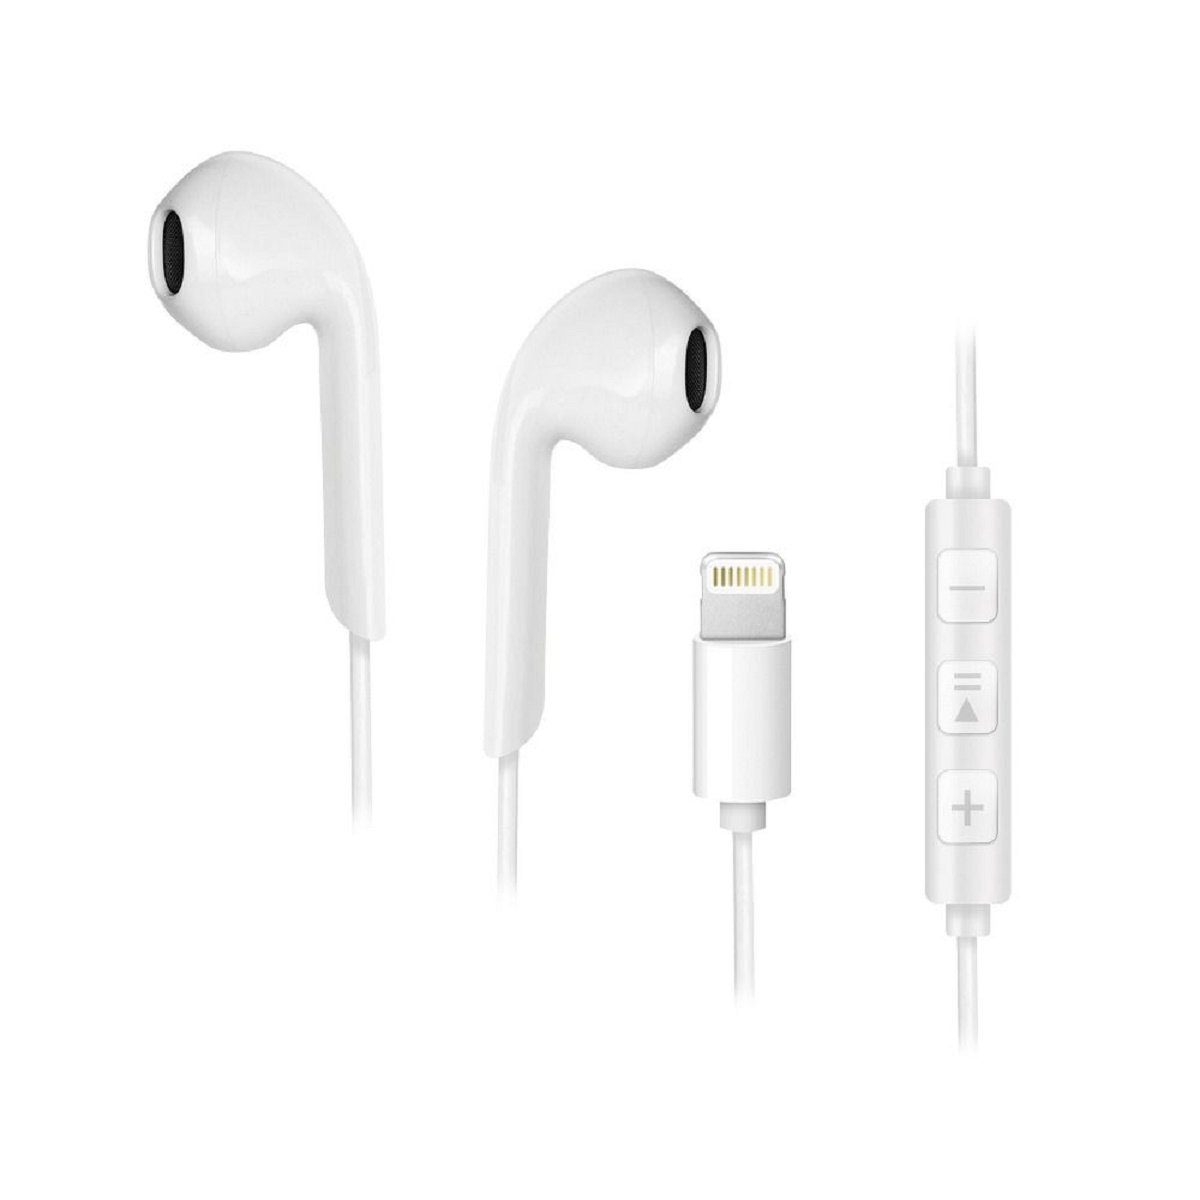 Forcell Stereo für Apple iPhone In-Ear-Kopfhörer Weiß iPhone-Anschluss 8-pin